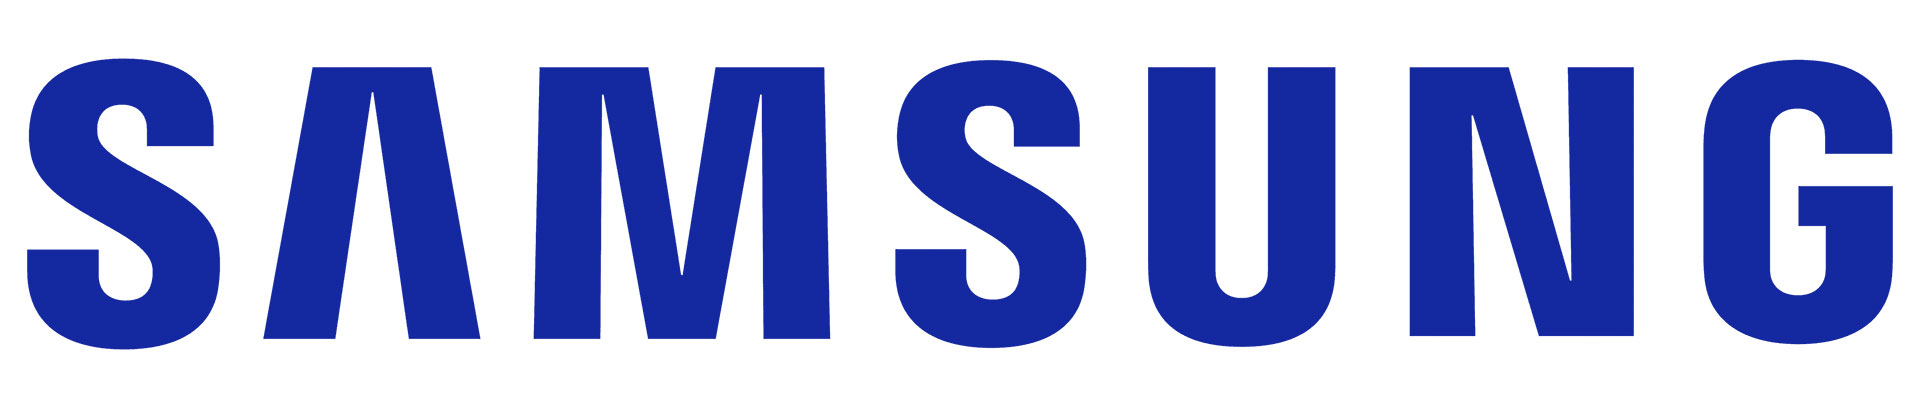 The current Samsung logo